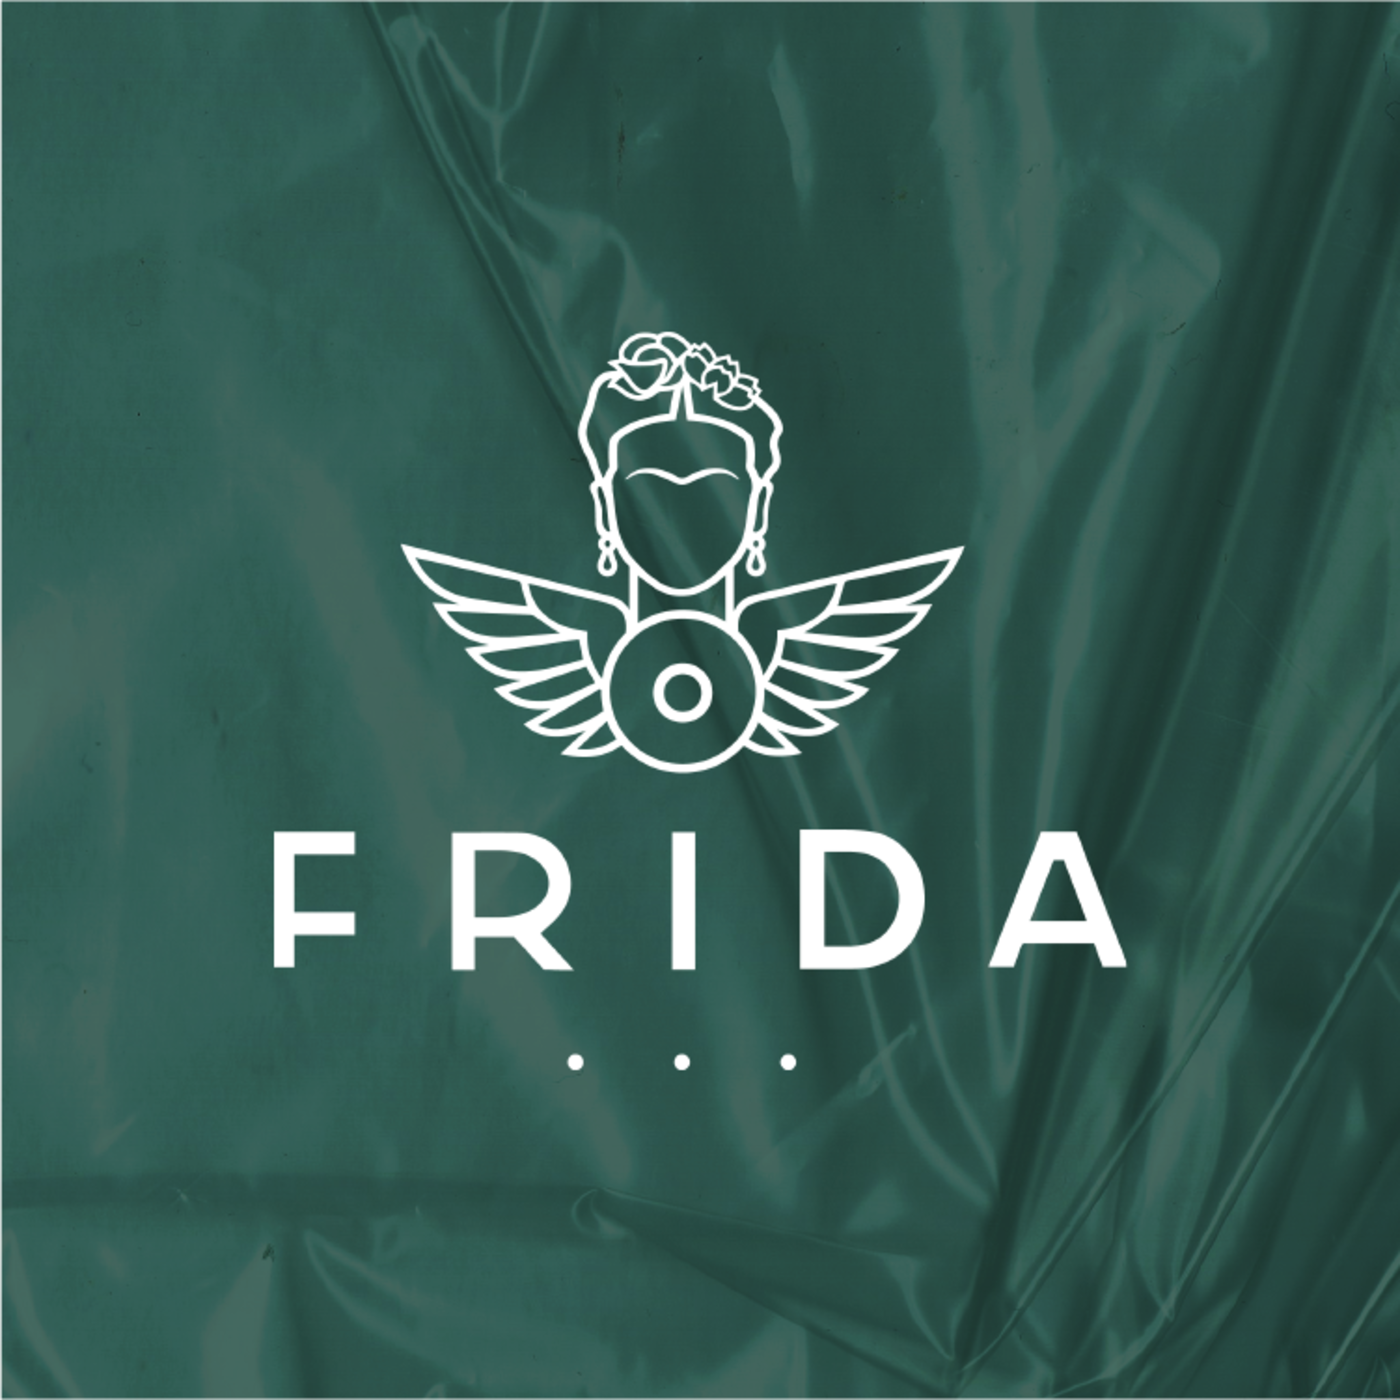 Frida | musica en valencià